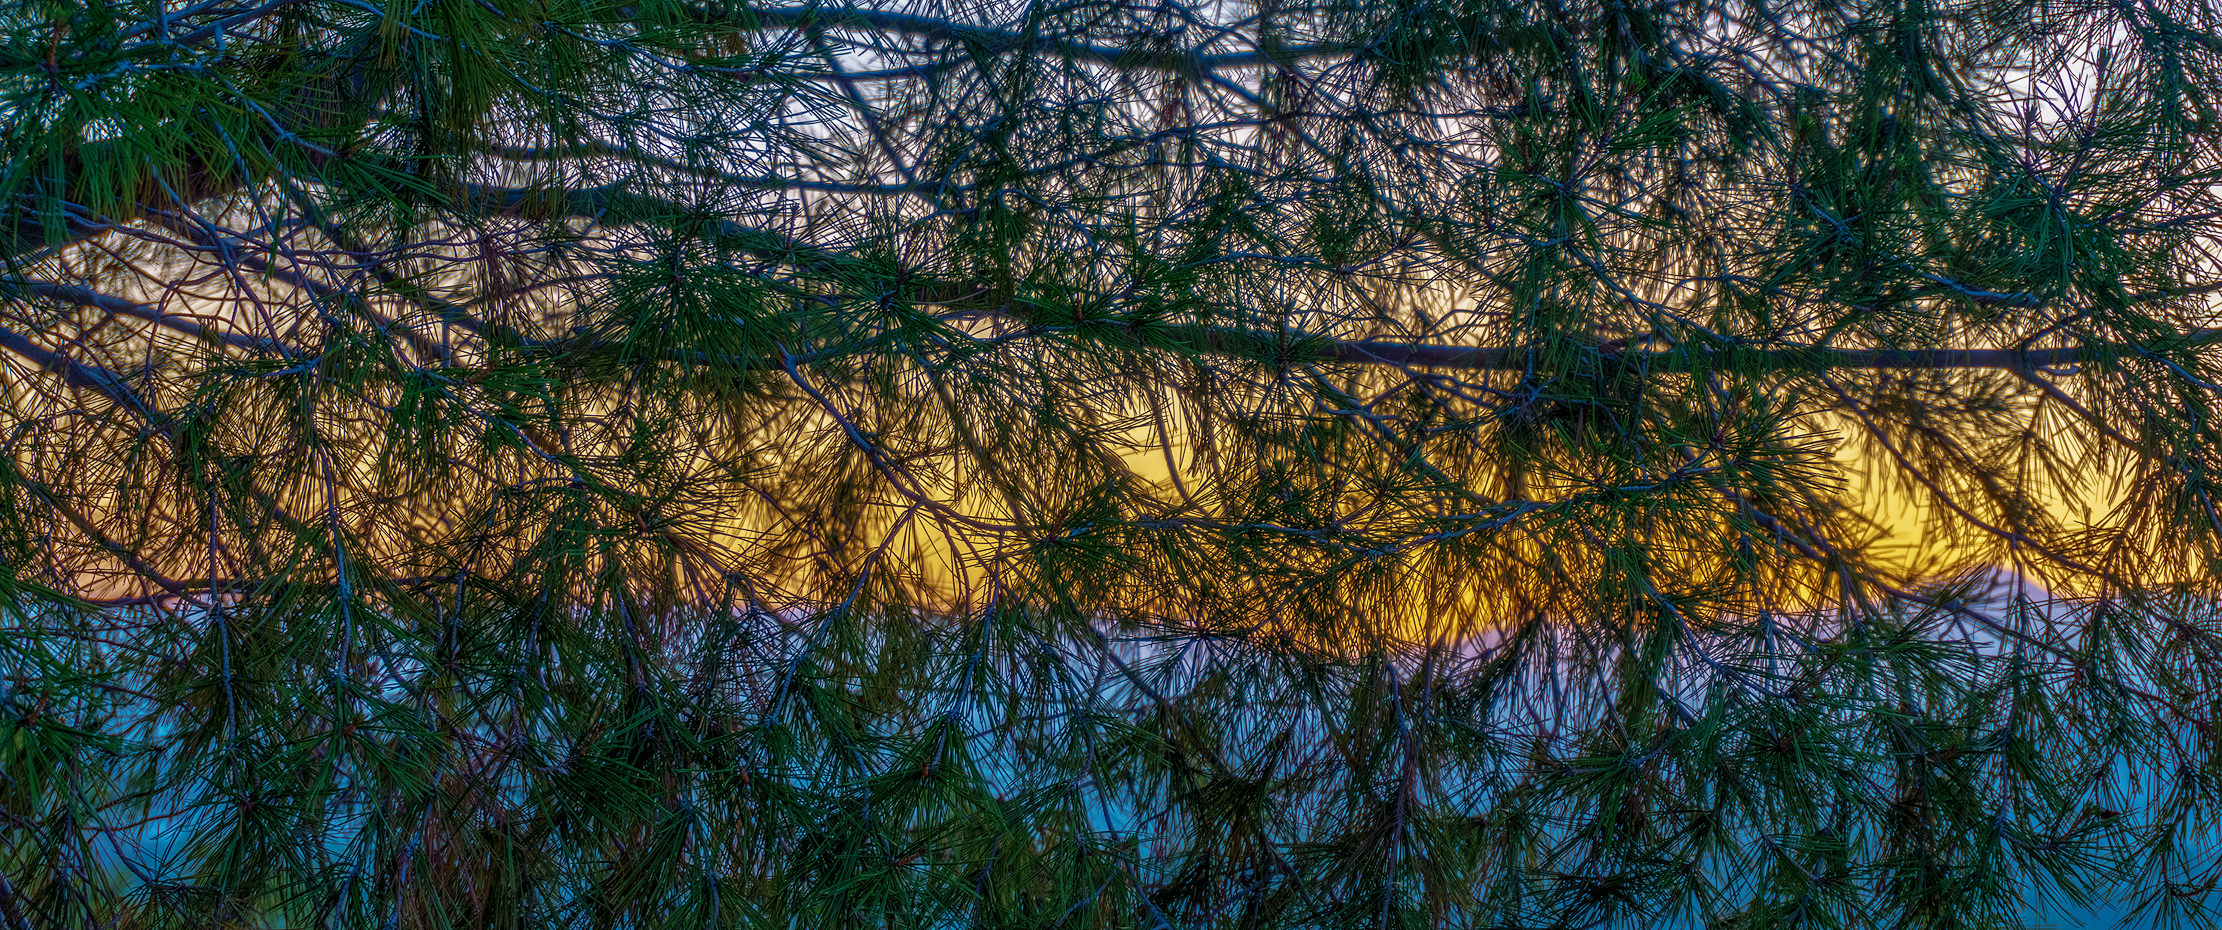 sunset through pine needles